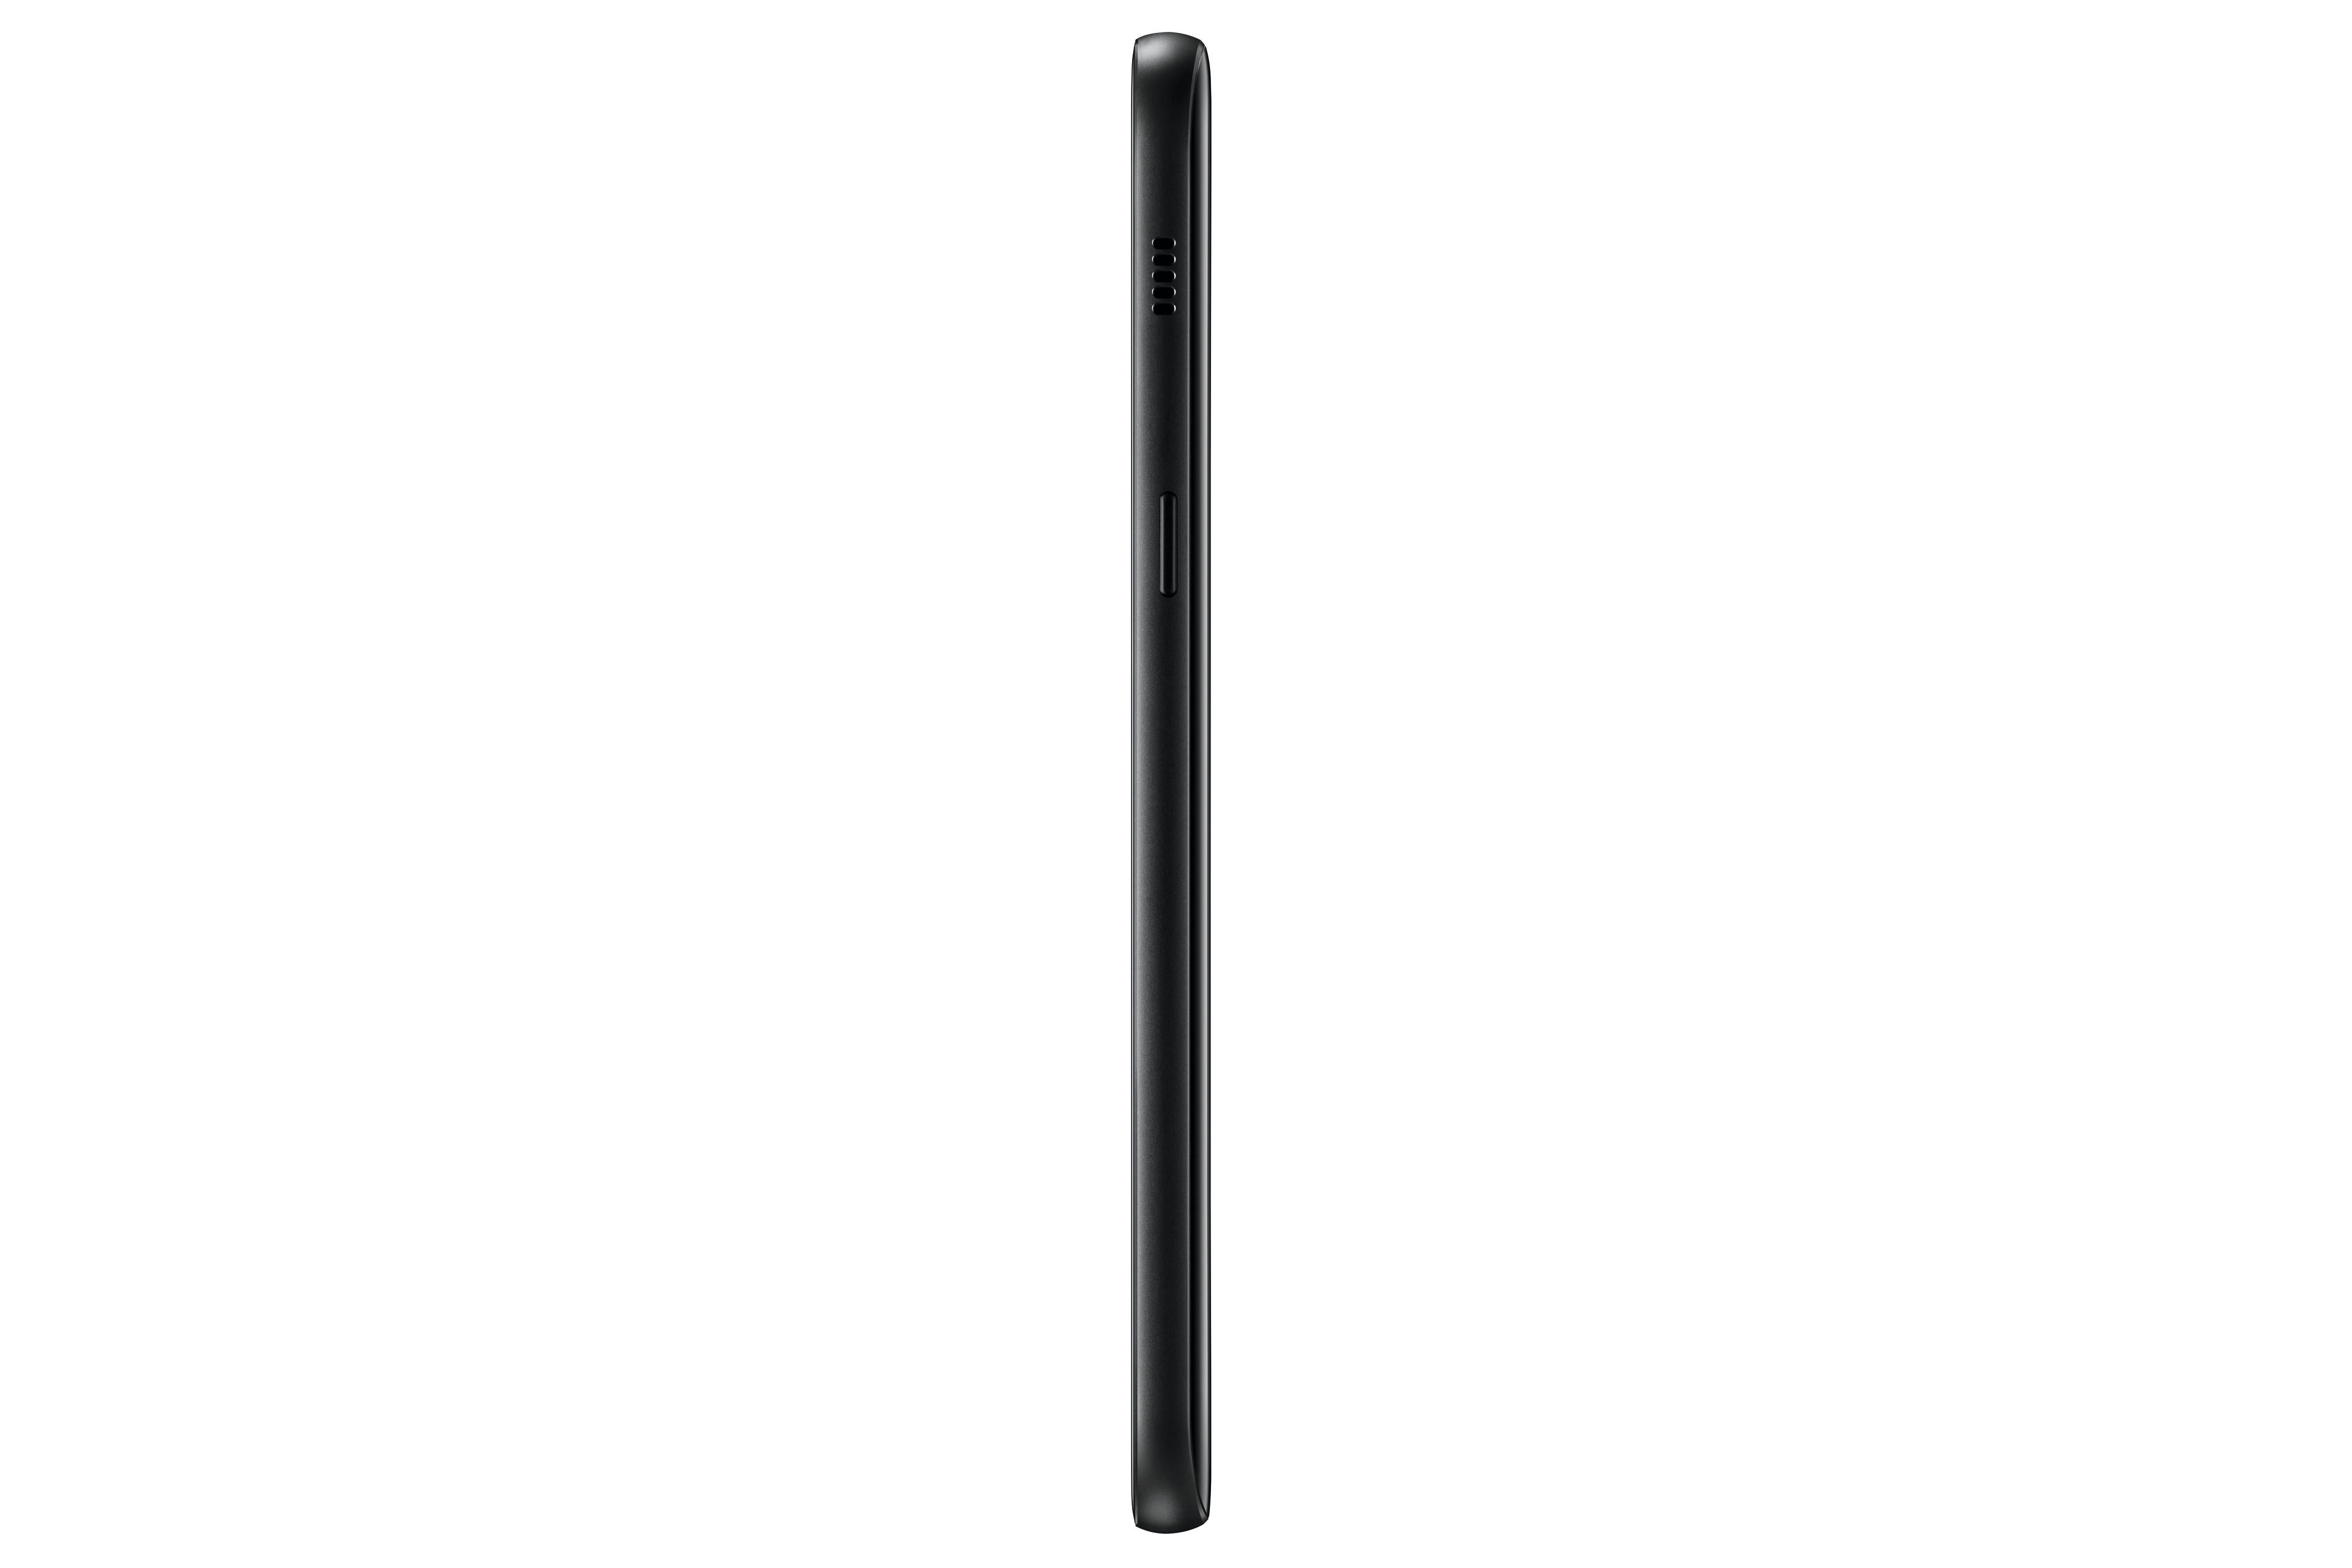 B-WARE (*) SAMSUNG Smartphone, A5 Galaxy (2017) Black Sky